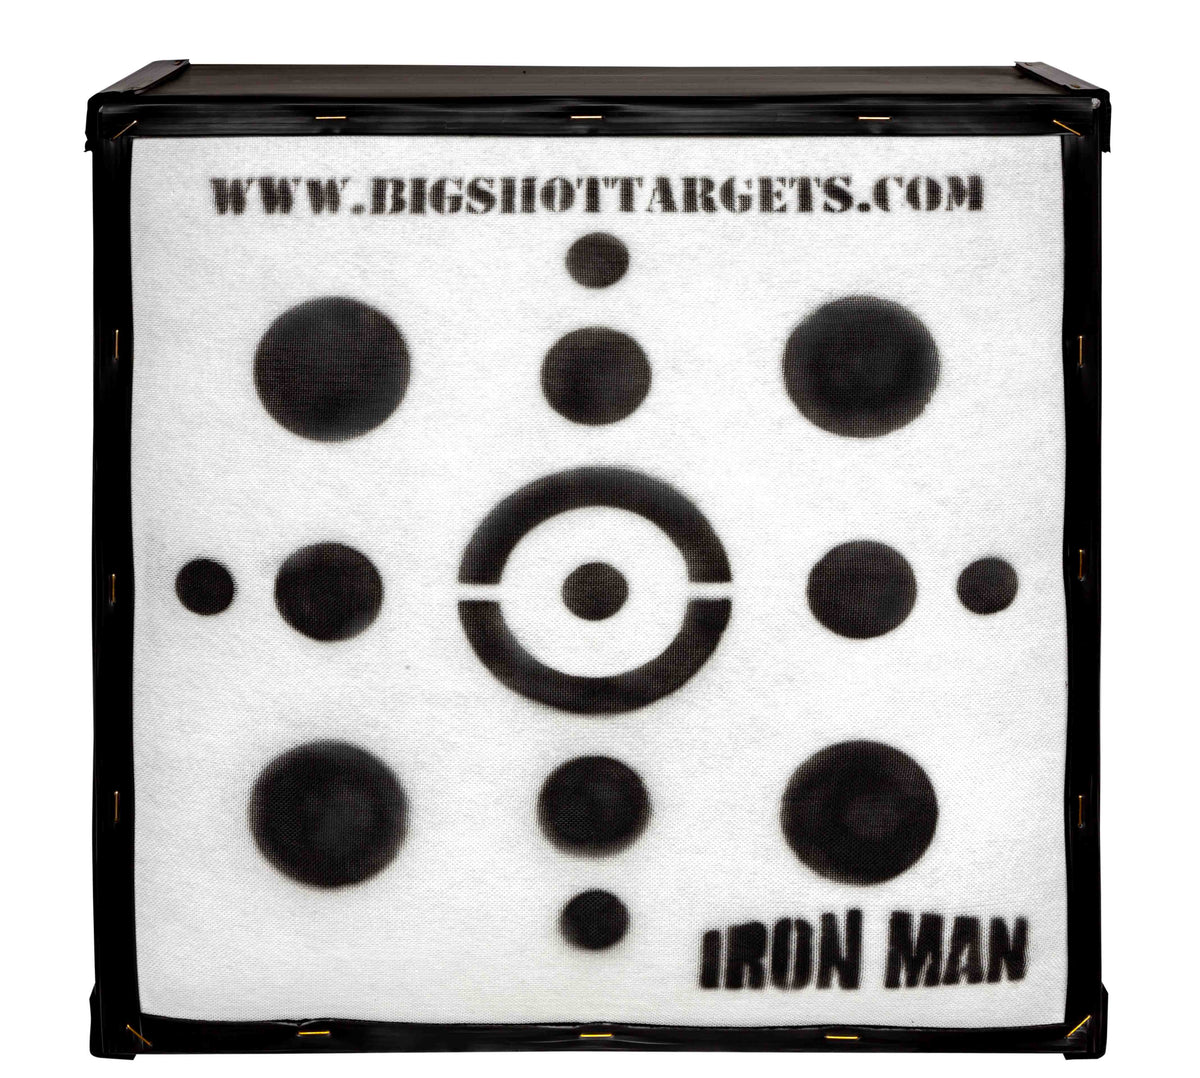 Target for Crossbow: Big Shot Iron Man 18″ High Kinetic Energy